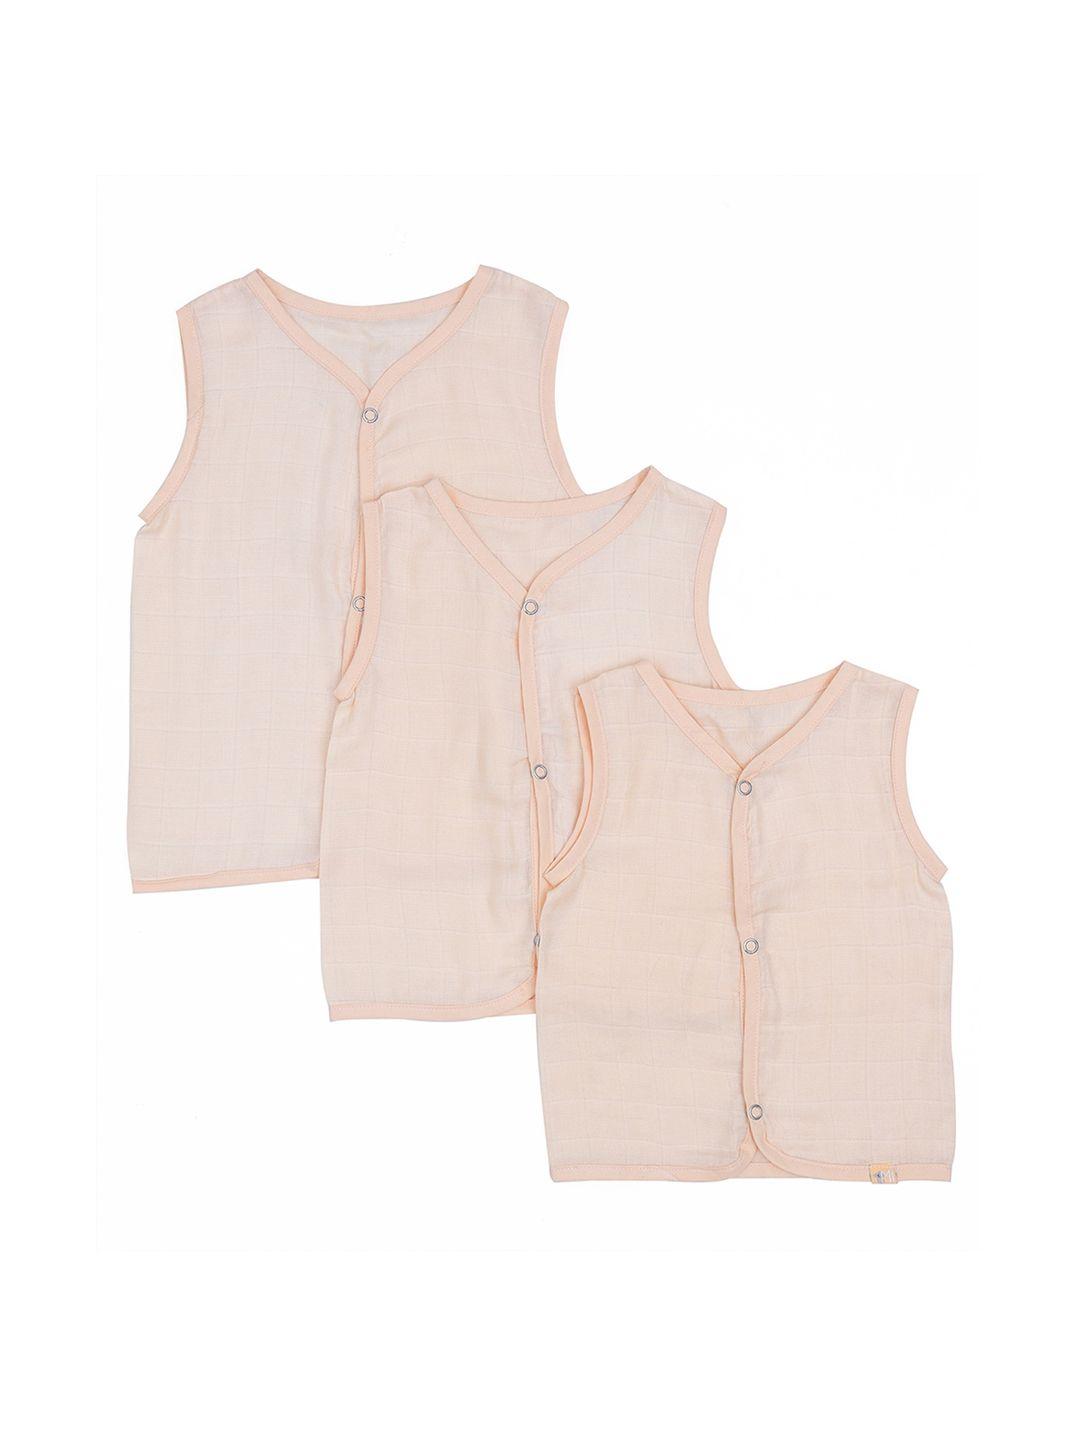 miarcus kids set of 3 beige checked cotton basic vests